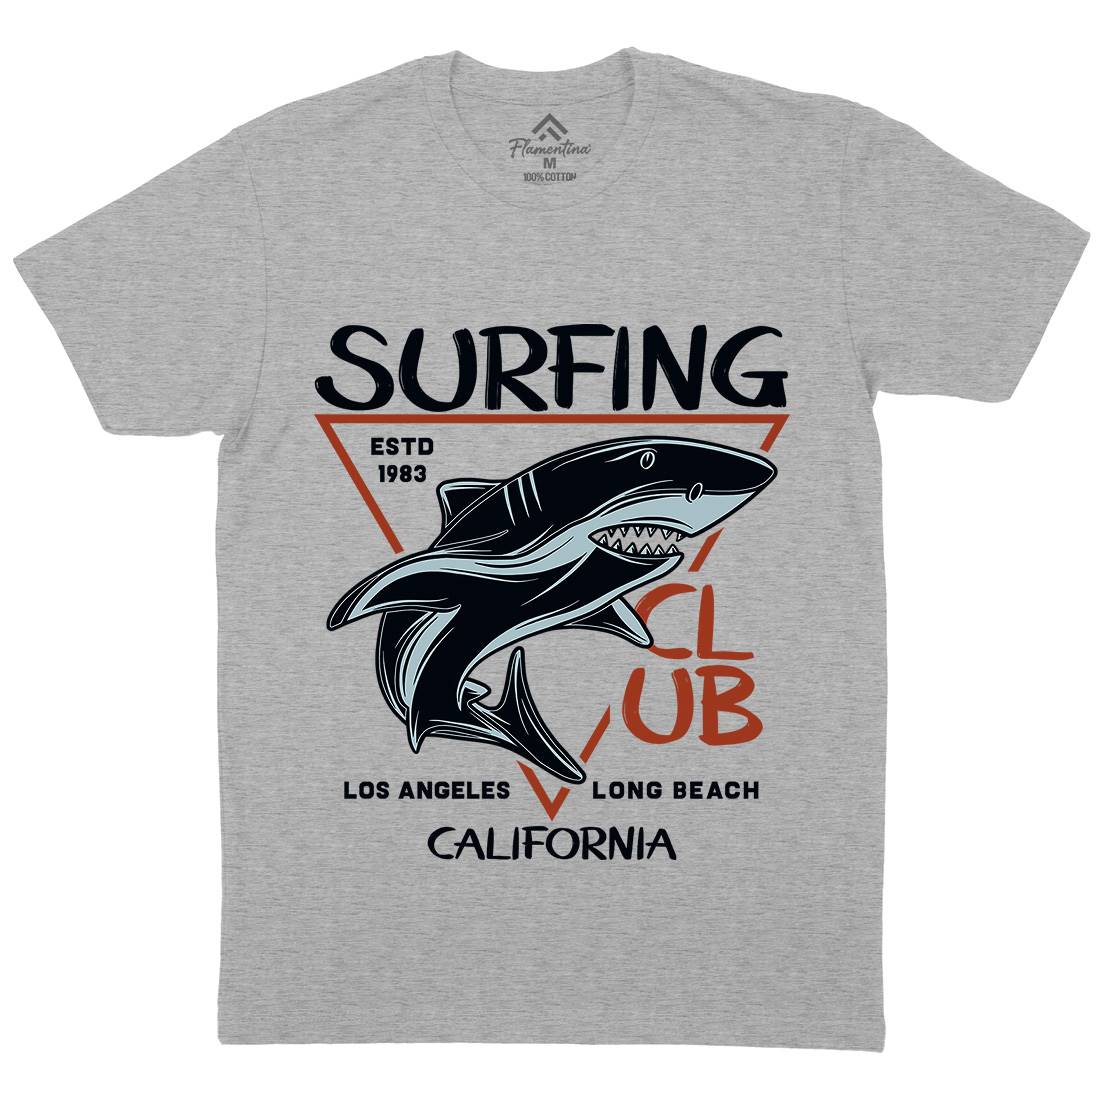 Shark Surfing Club Mens Crew Neck T-Shirt Navy D968